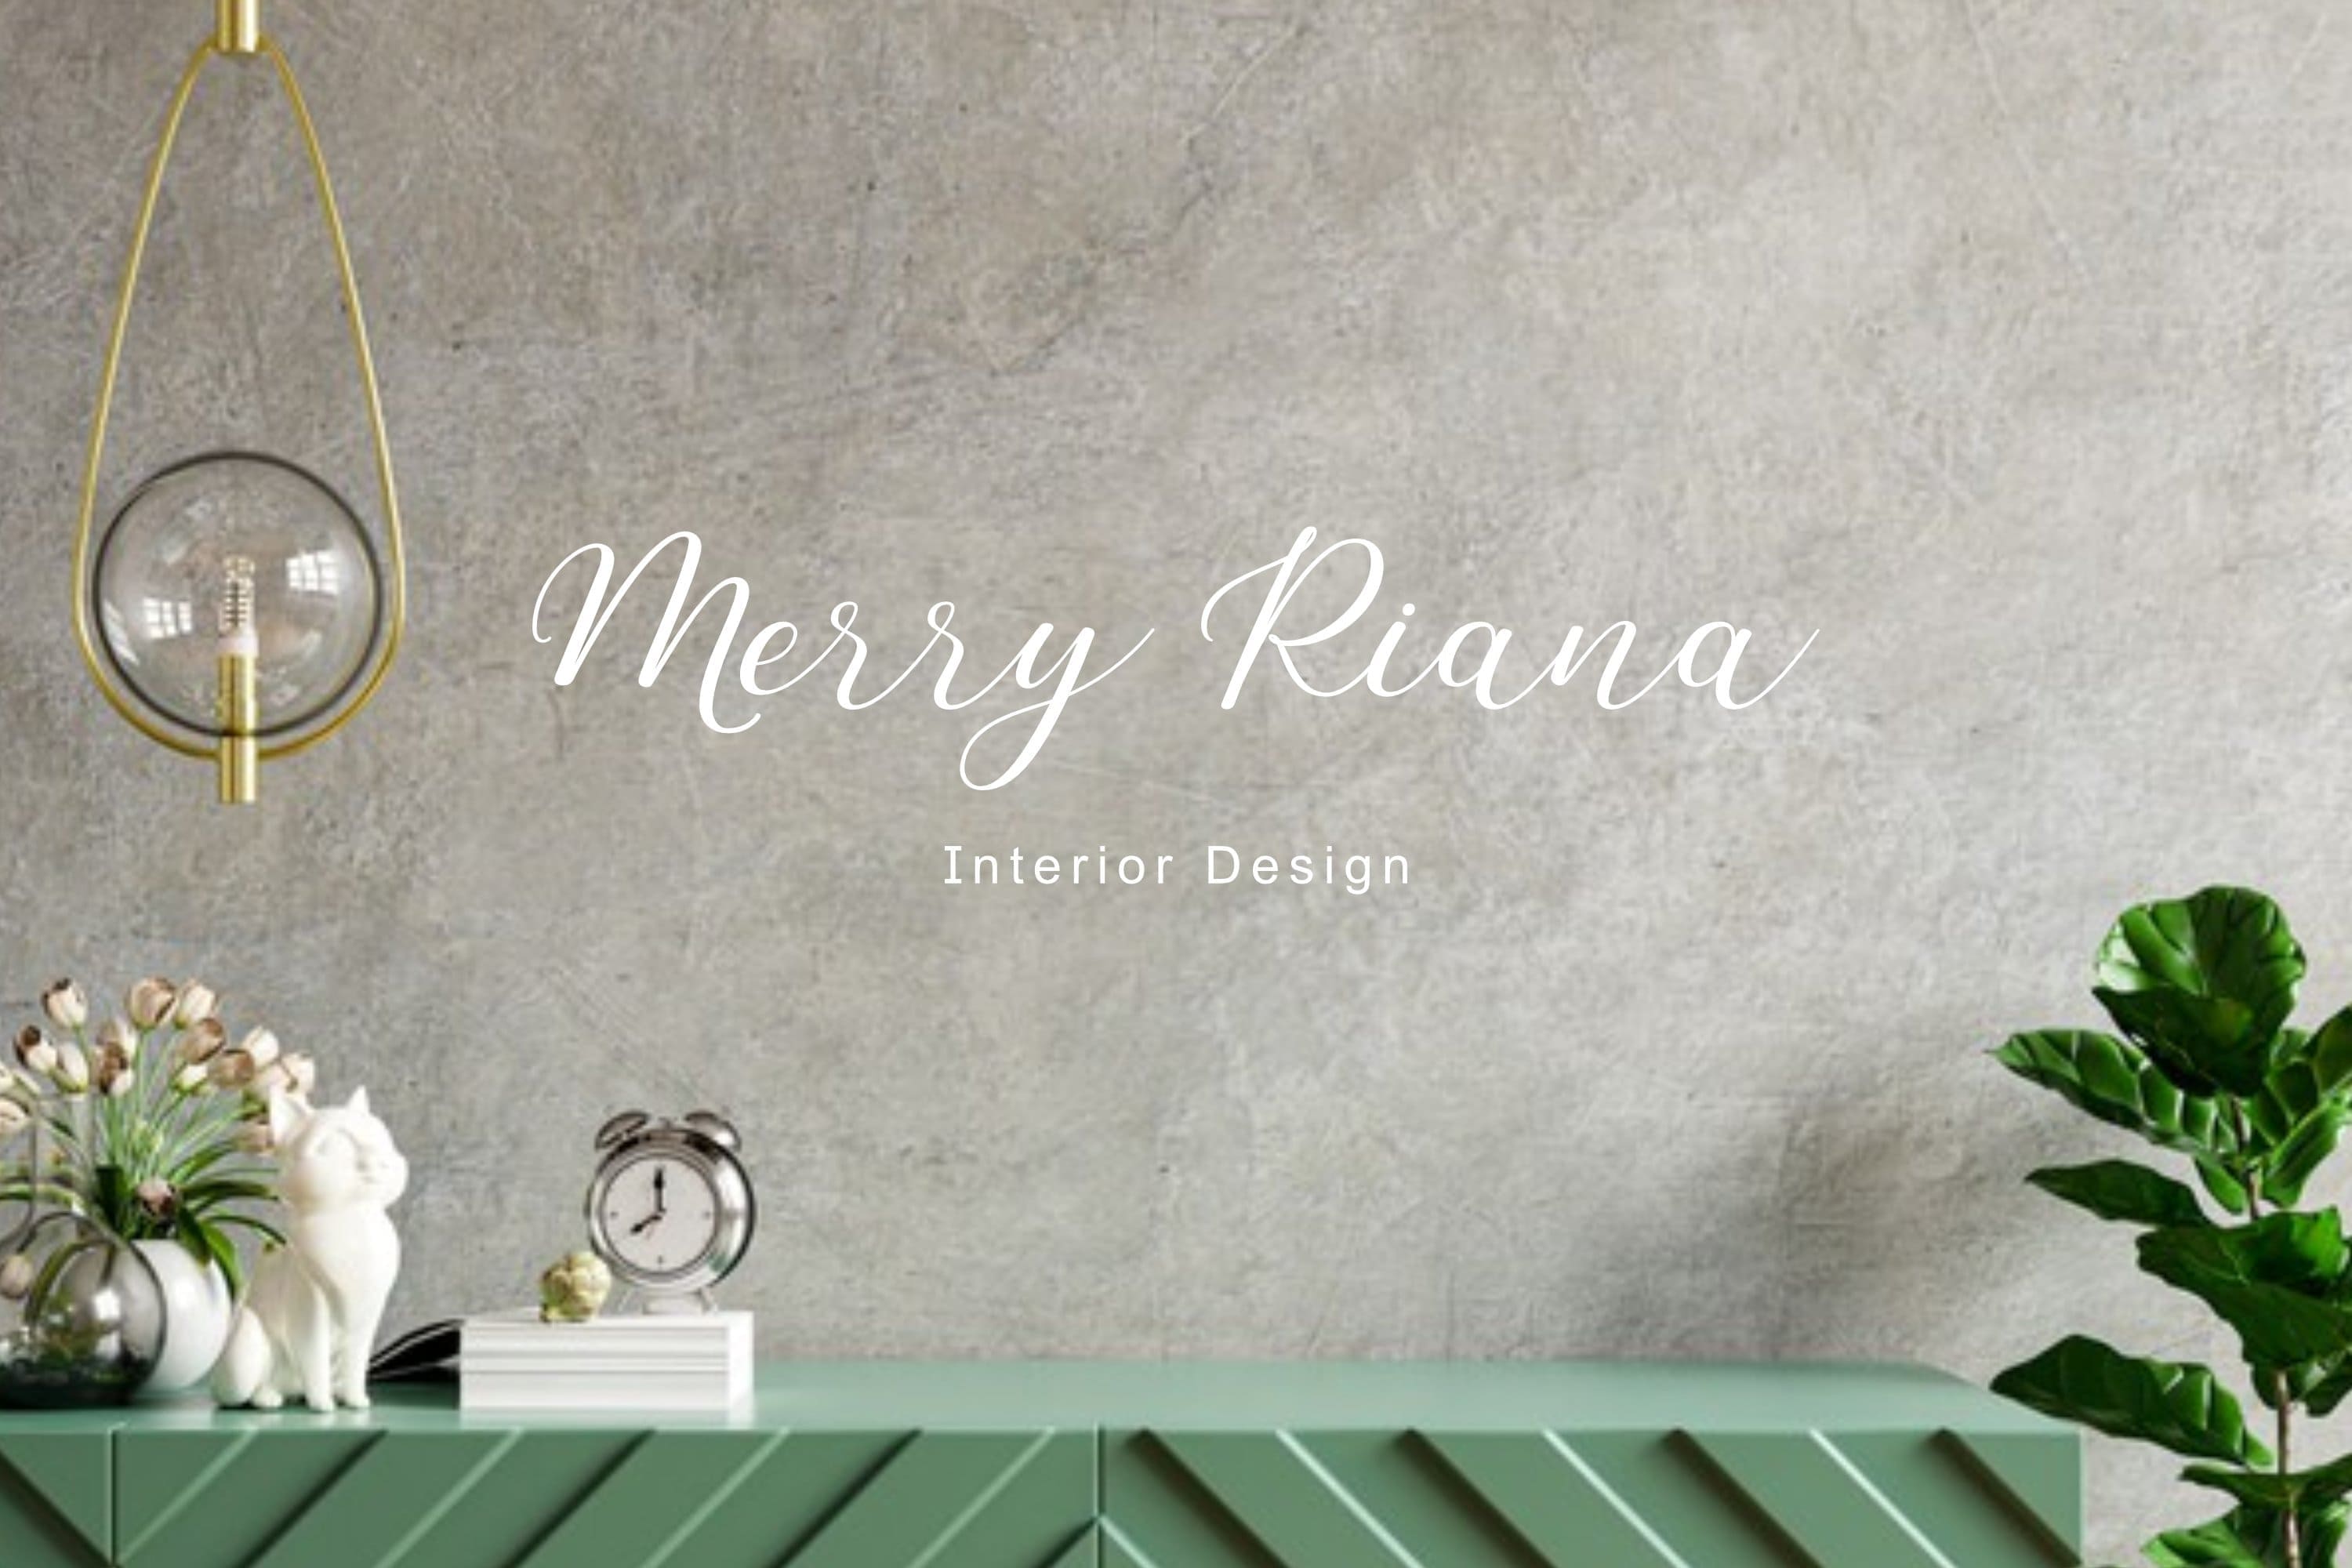 Merry Riana, Interior Design.